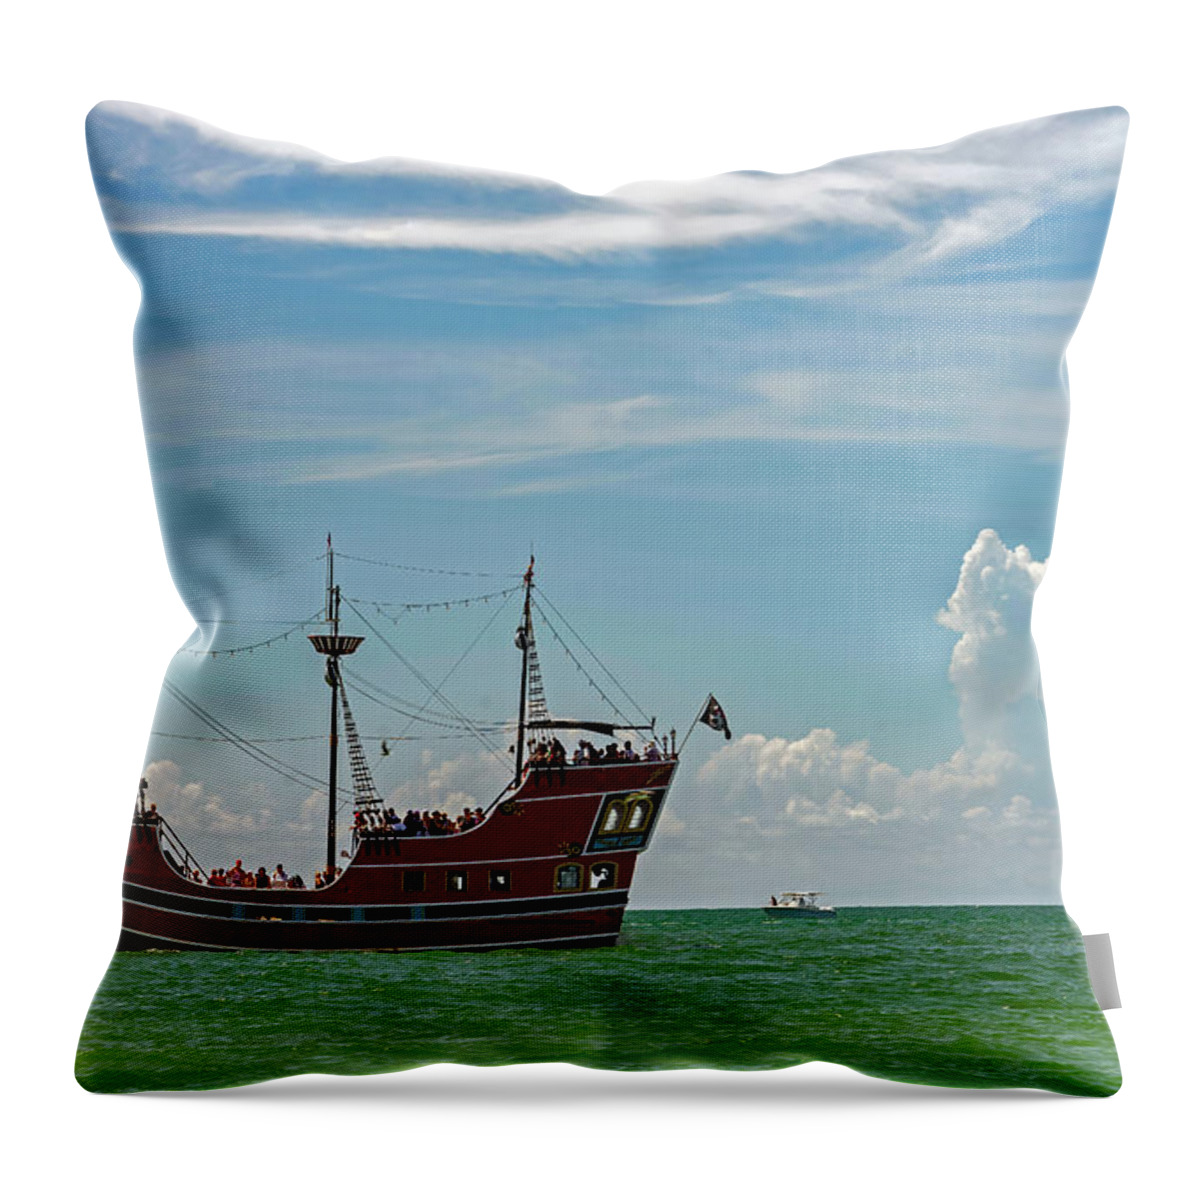 Estock Throw Pillow featuring the digital art Florida, Clearwater, Captain Memo's Pirate Cruise by Gabriel Jaime Jimenez